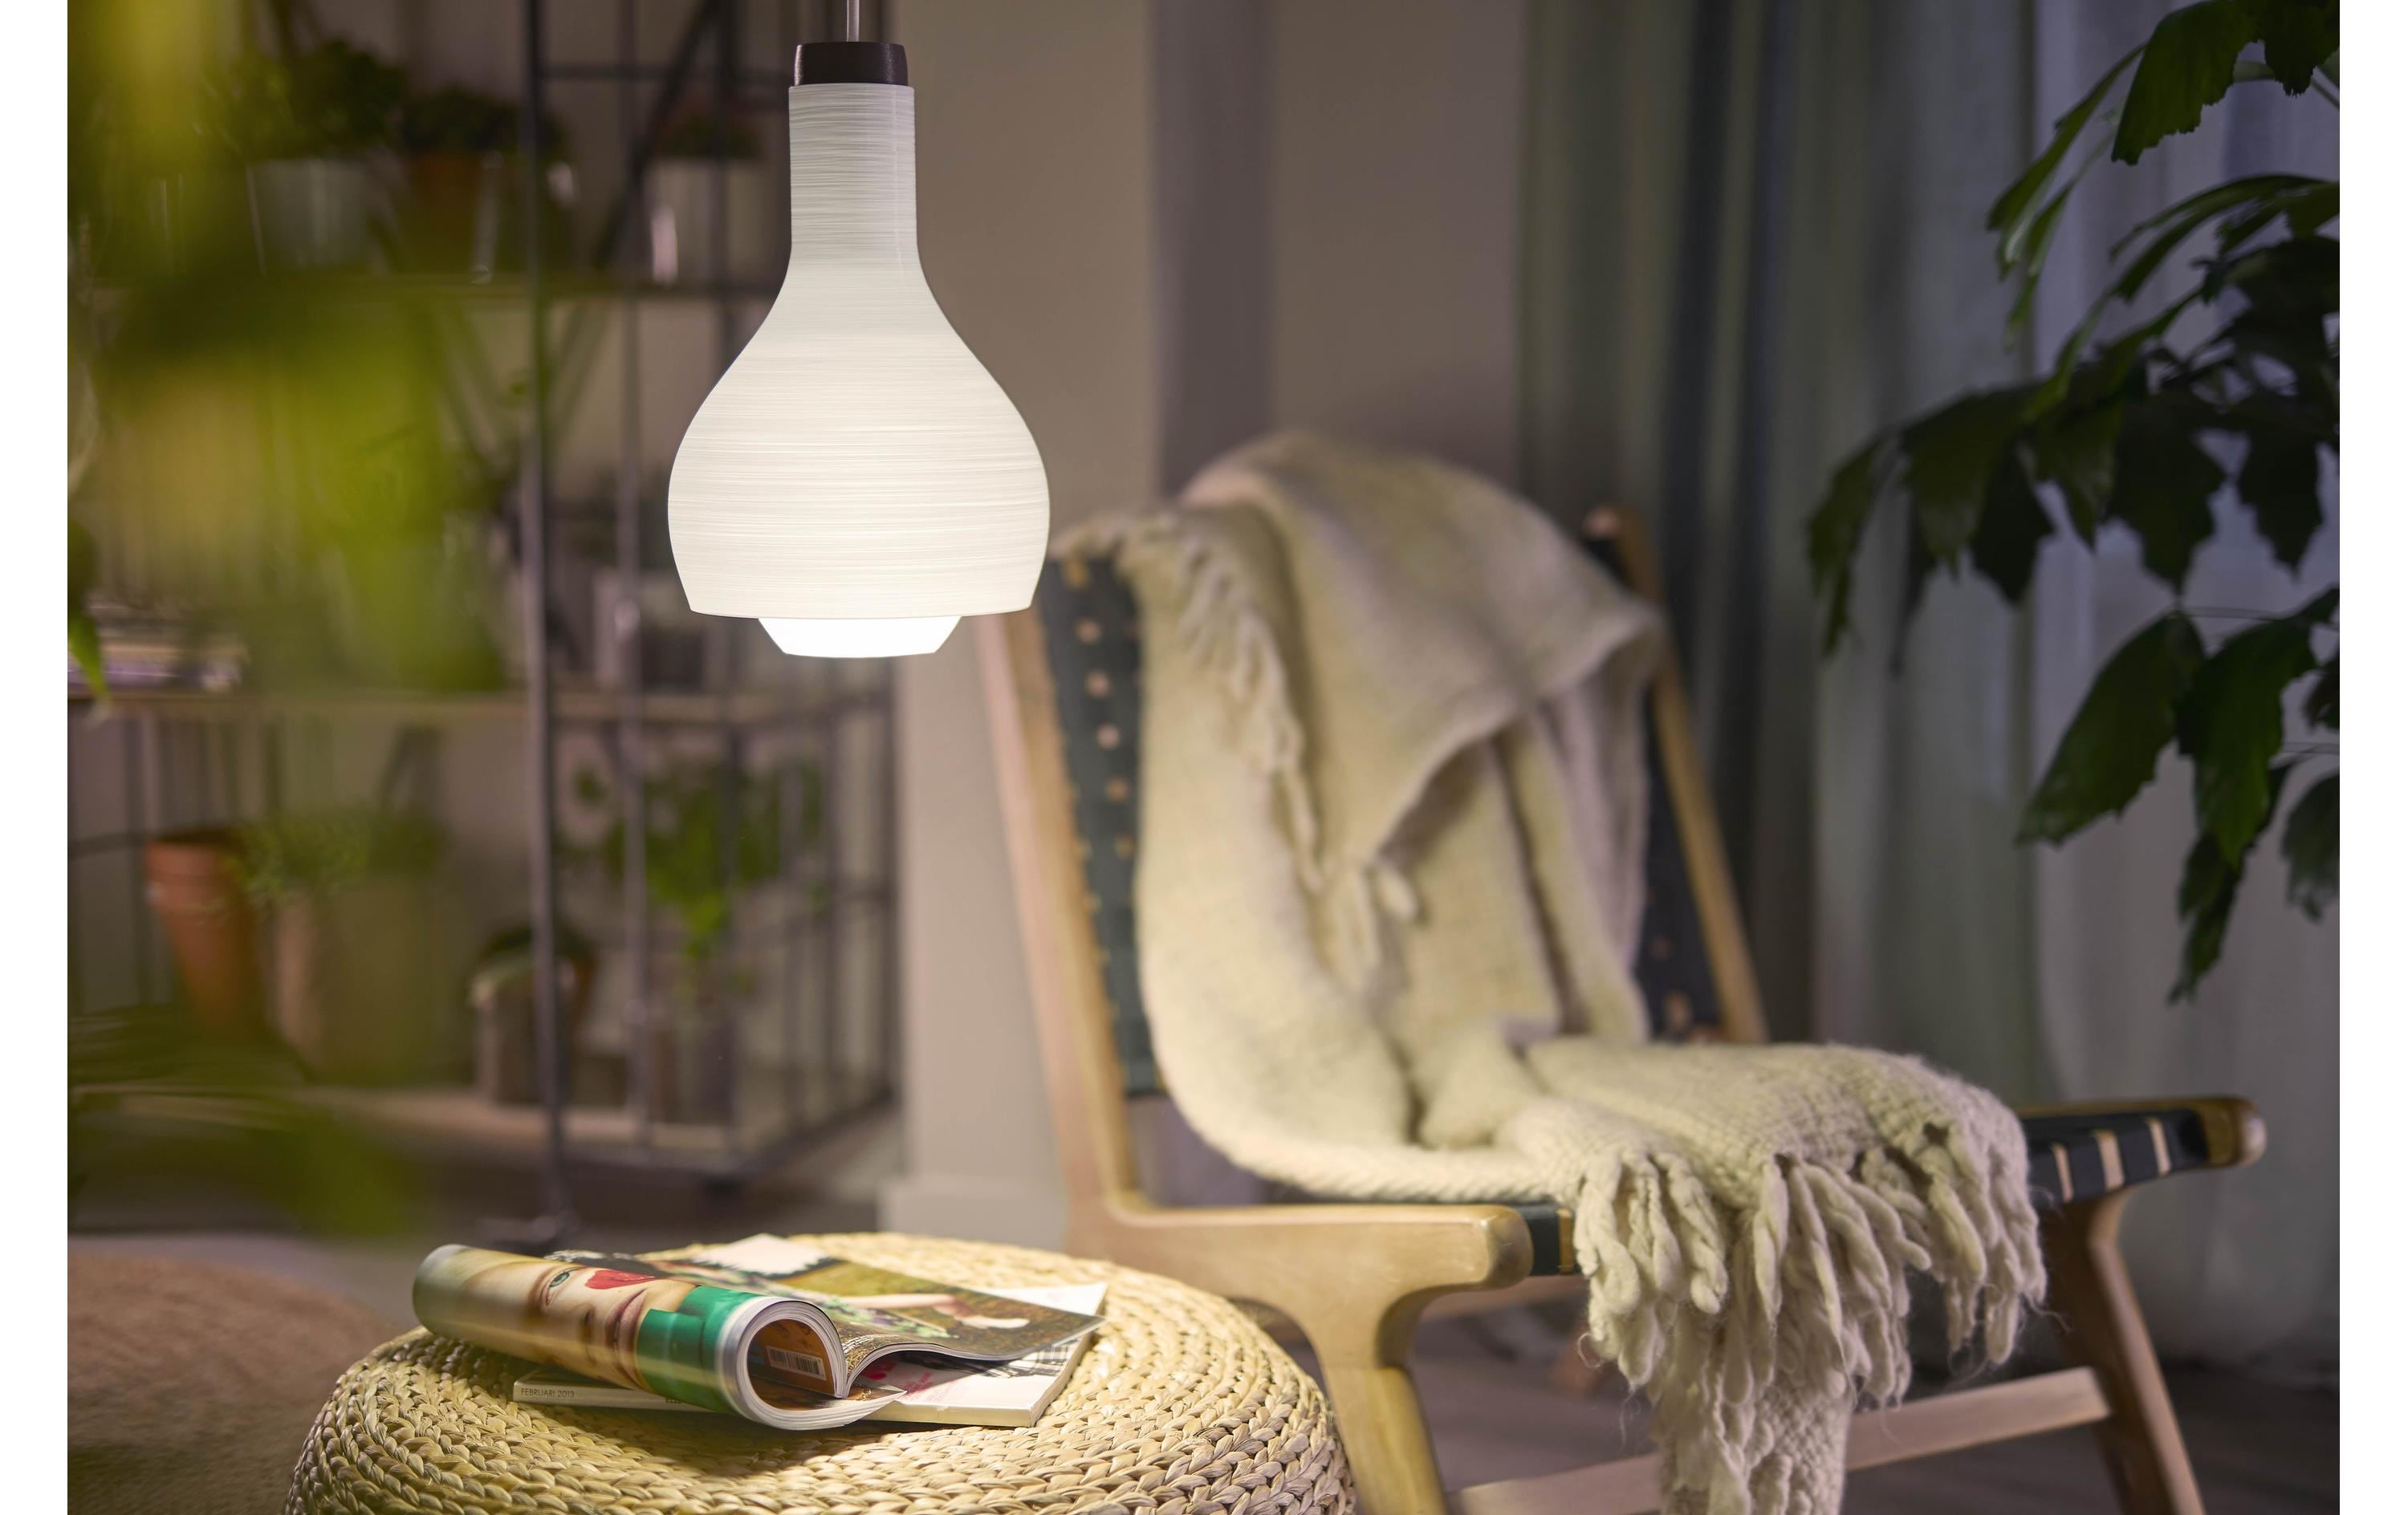 Philips Lampe E27 Edison LED, Ultra-Effizient, Warmweiss, 60W Ersatz